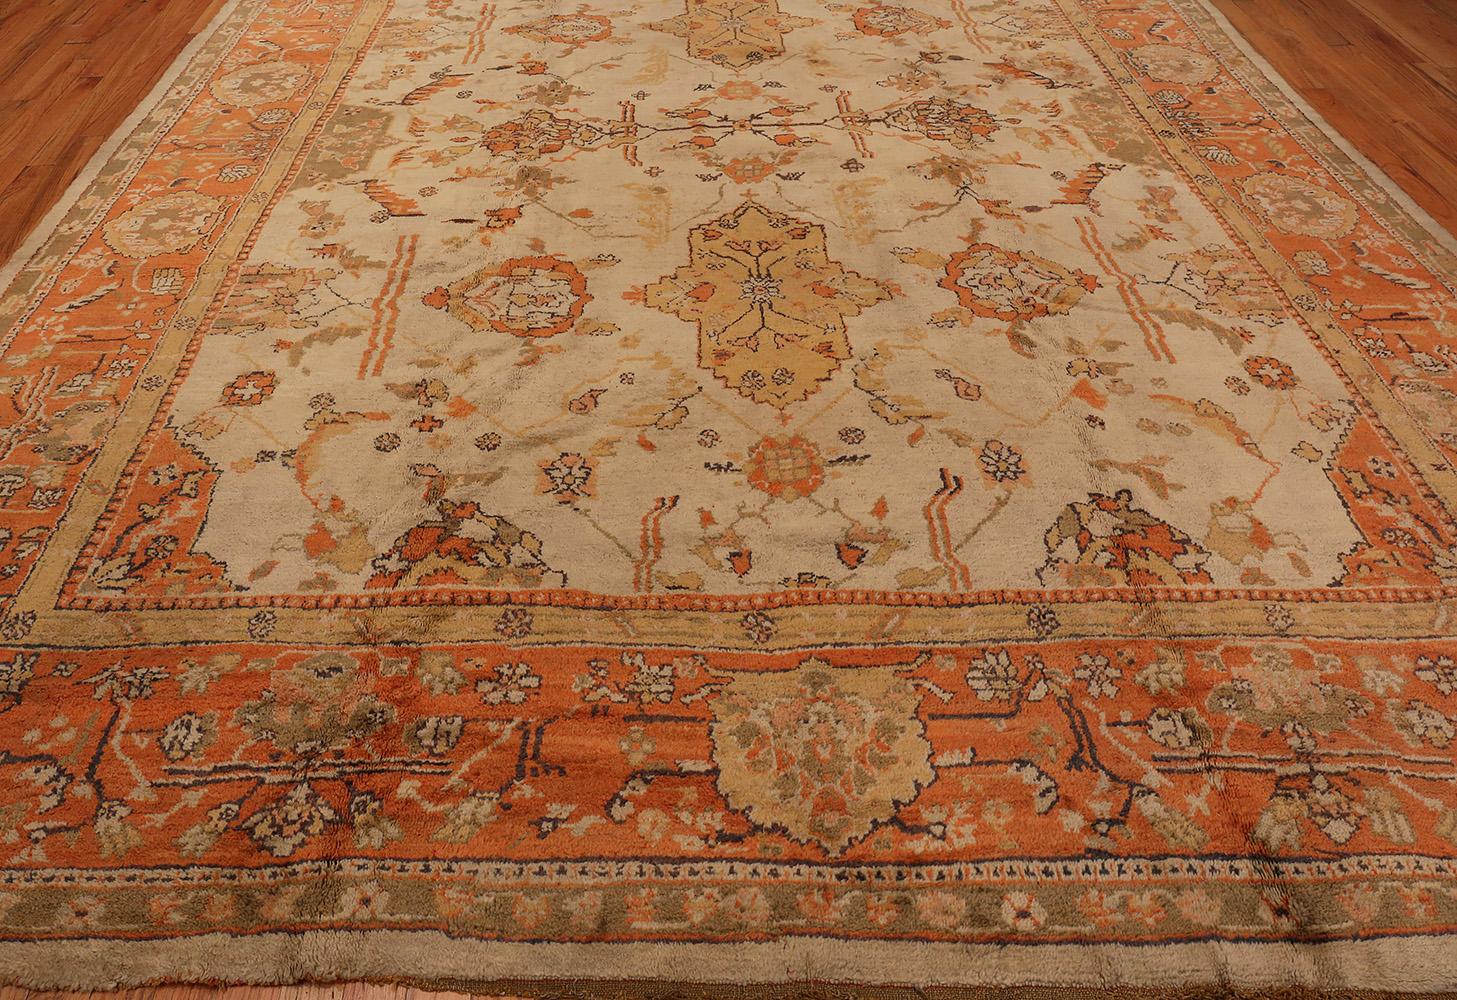 Wool Nazmiyal Collection Antique Turkish Oushak Oriental Rug. Size: 12 ft x 15 ft